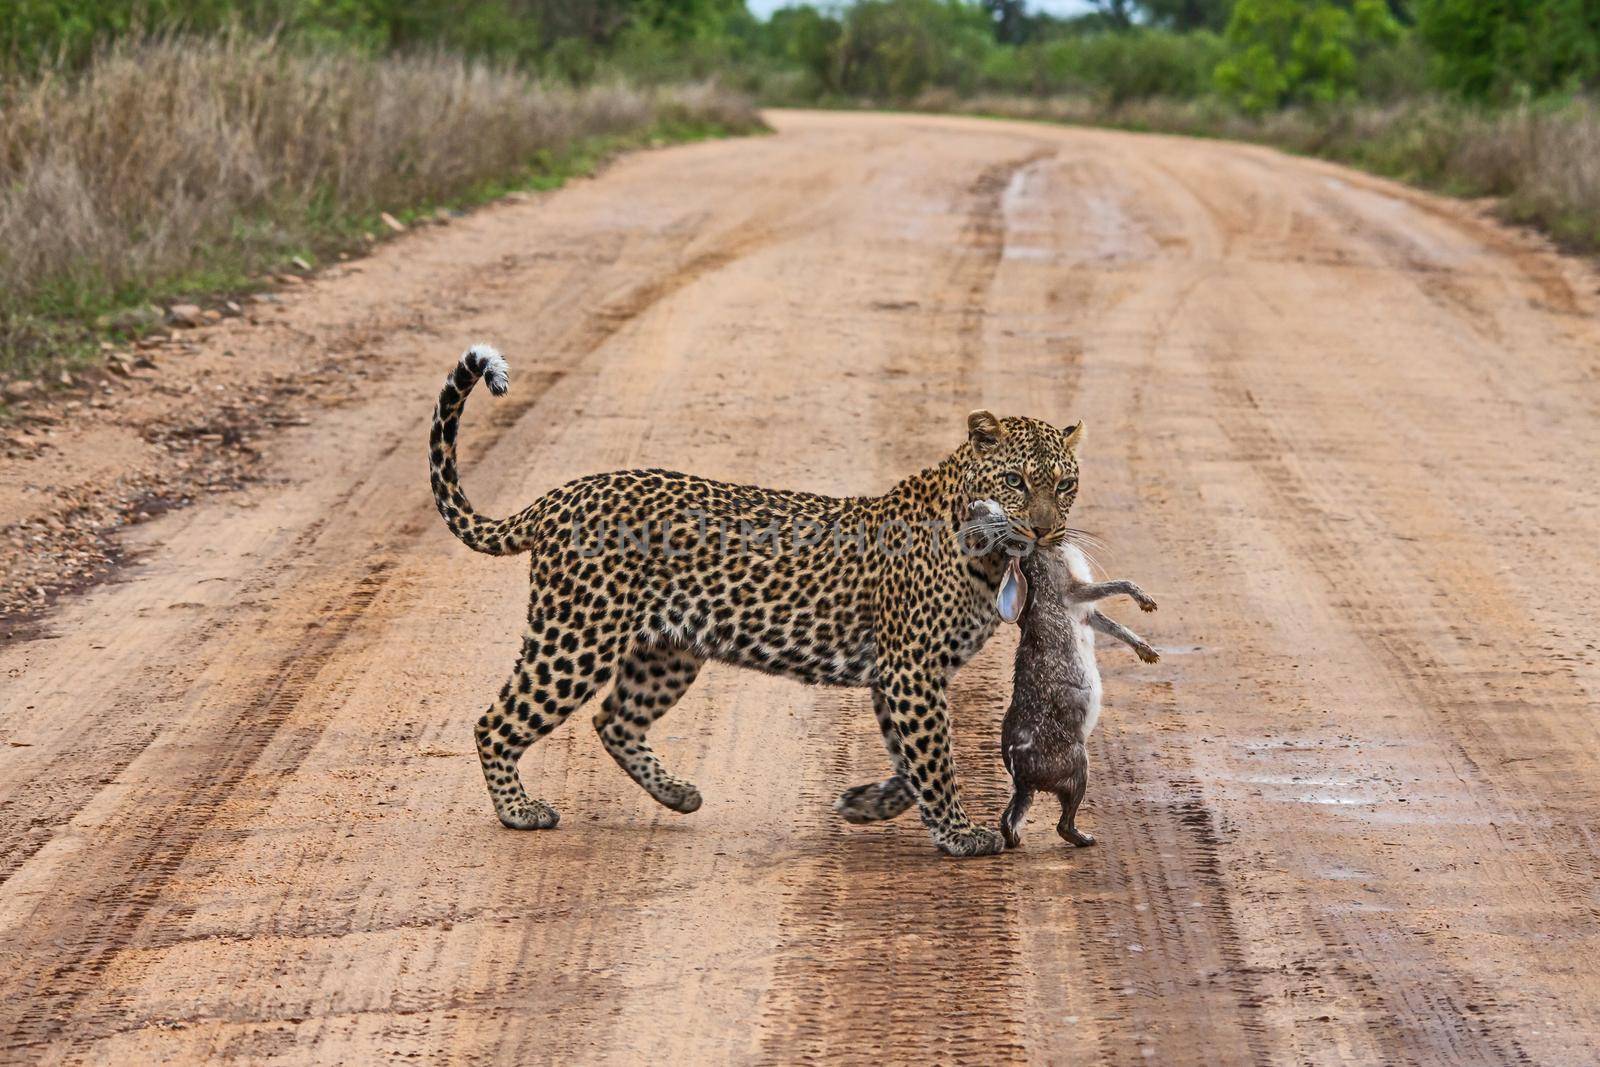 Leopard (Panthera pardus) with Scrub Hare (Lepus saxatilis) prey 15170 by kobus_peche